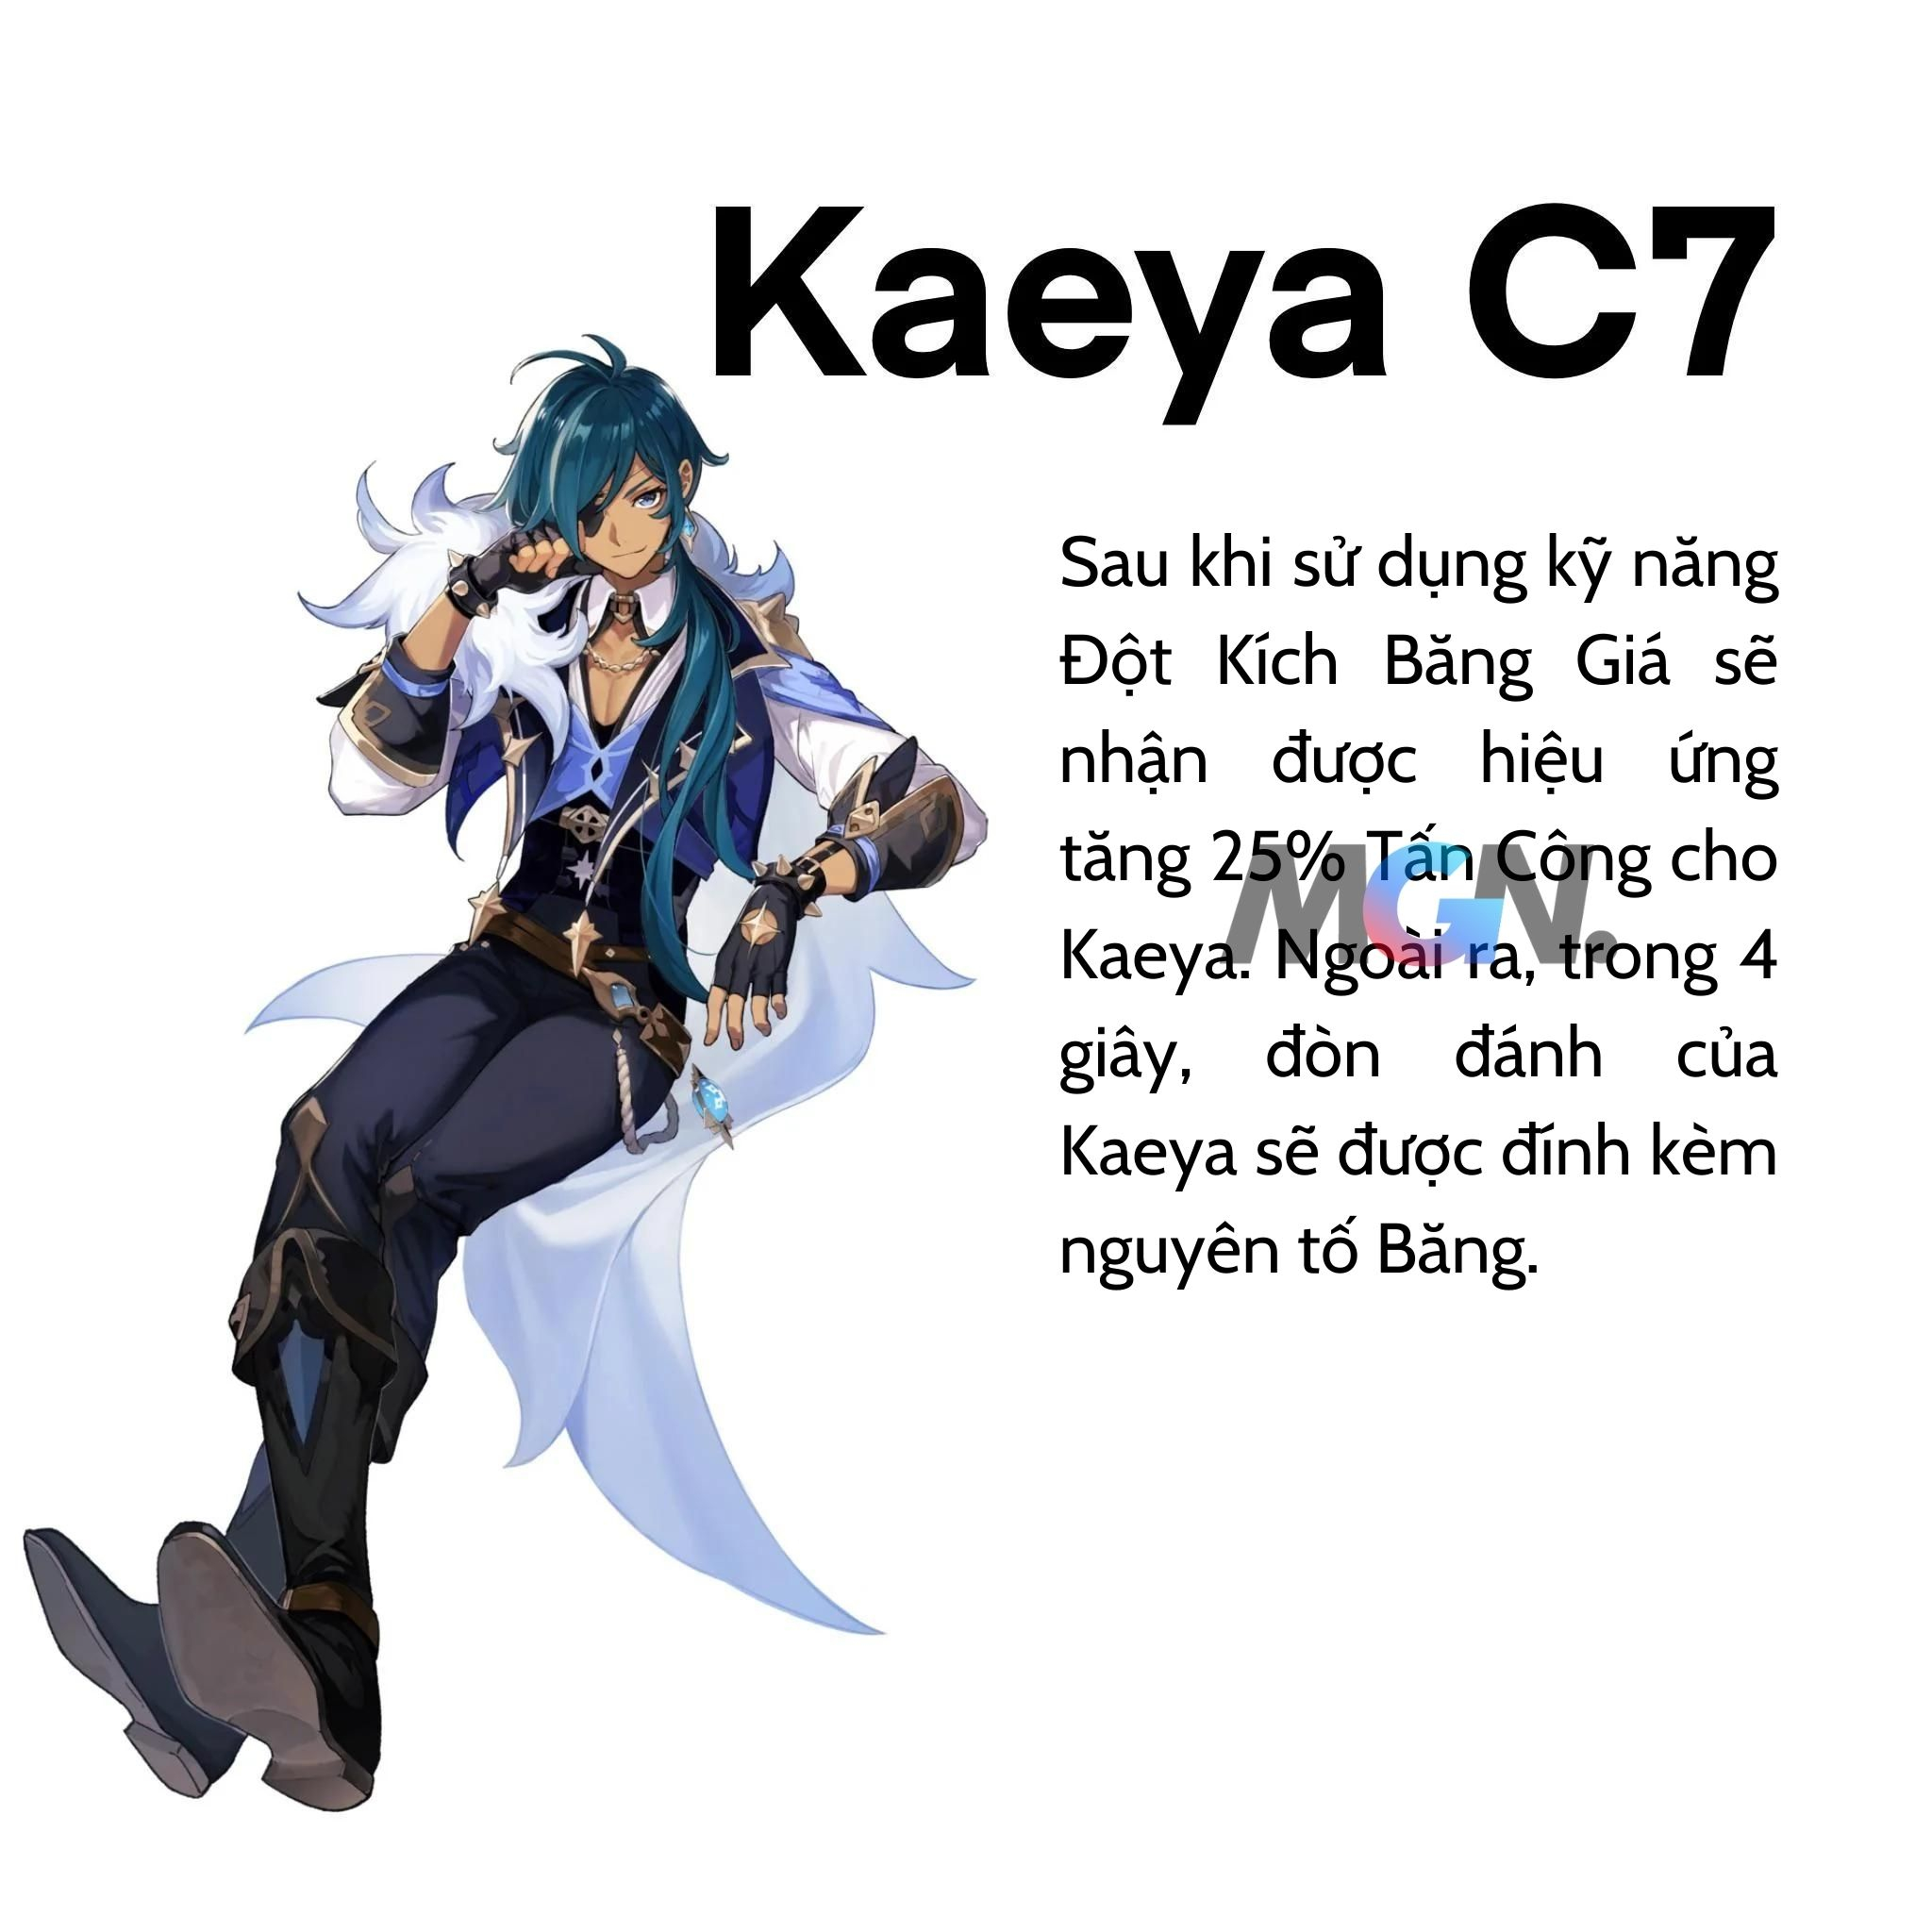 Kaeya's 7th Zodiac Sign